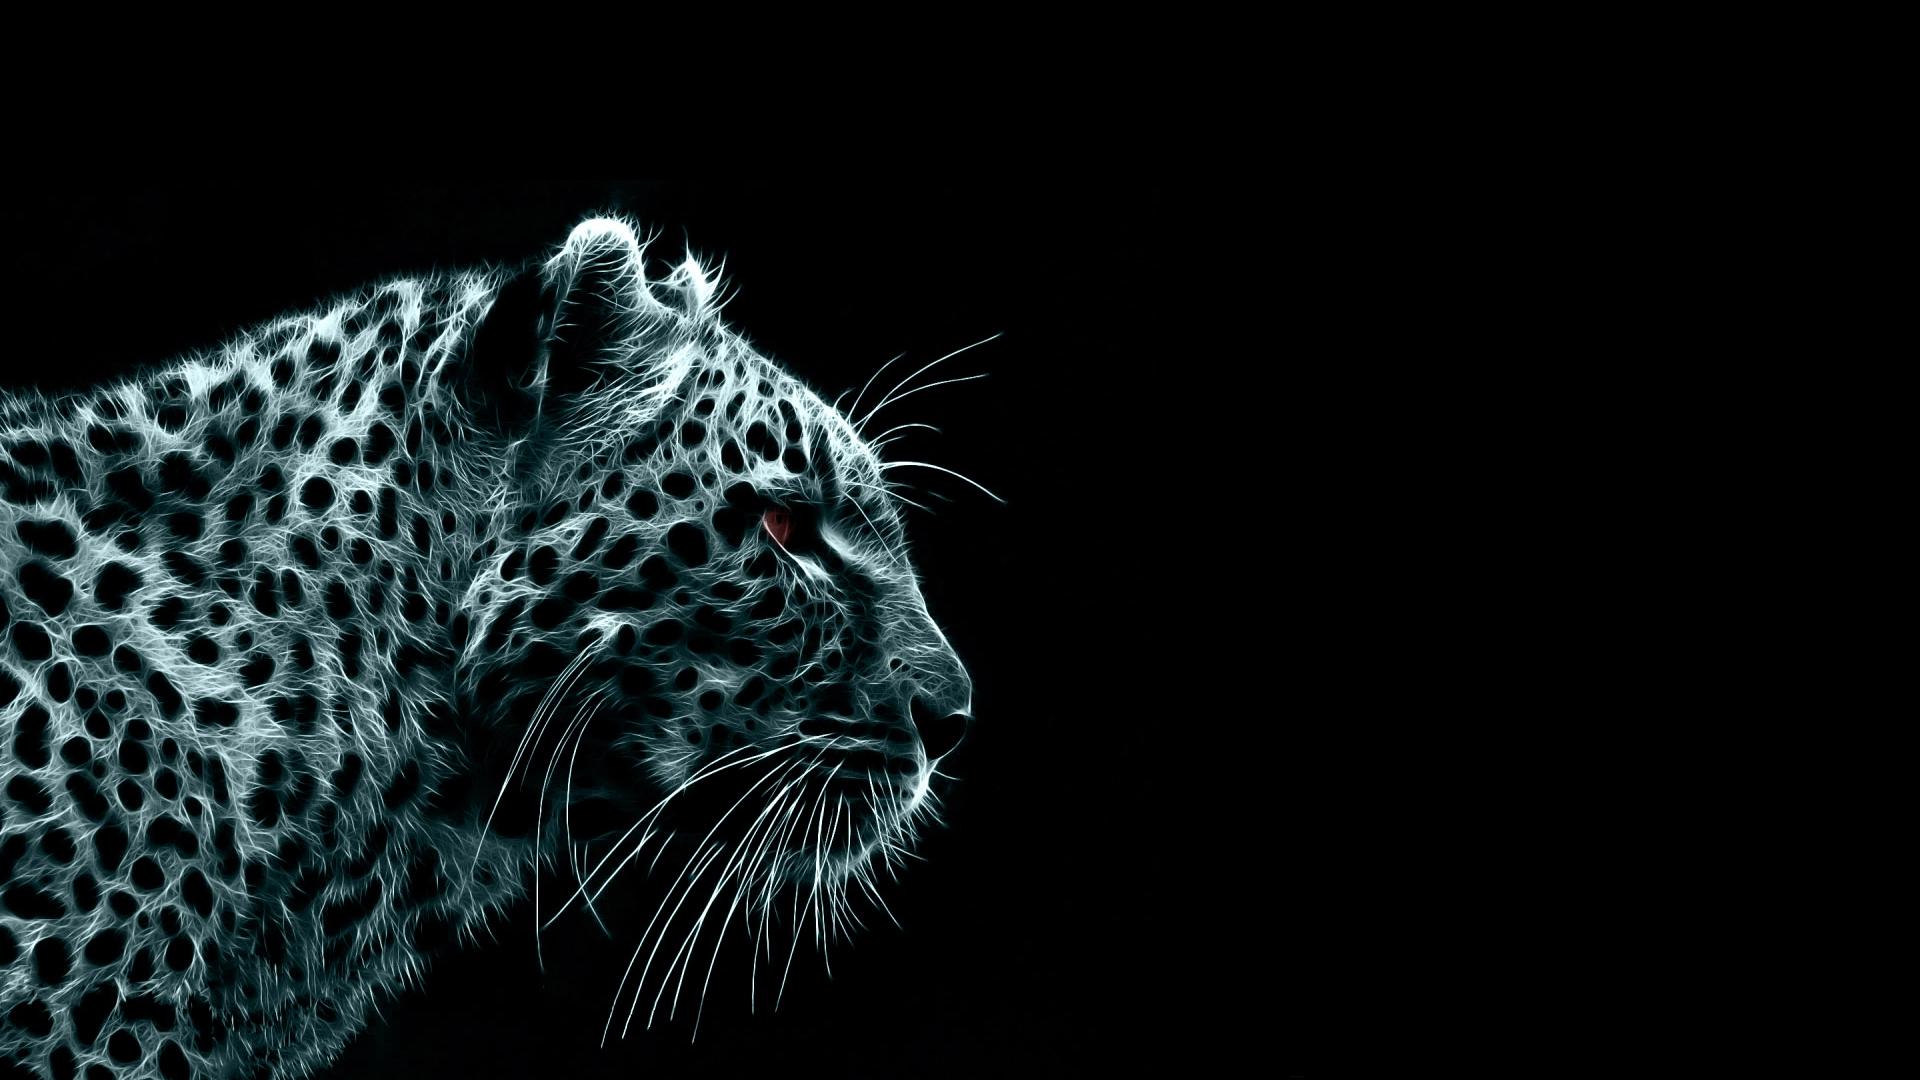 Fractalius, leopards - desktop wallpaper